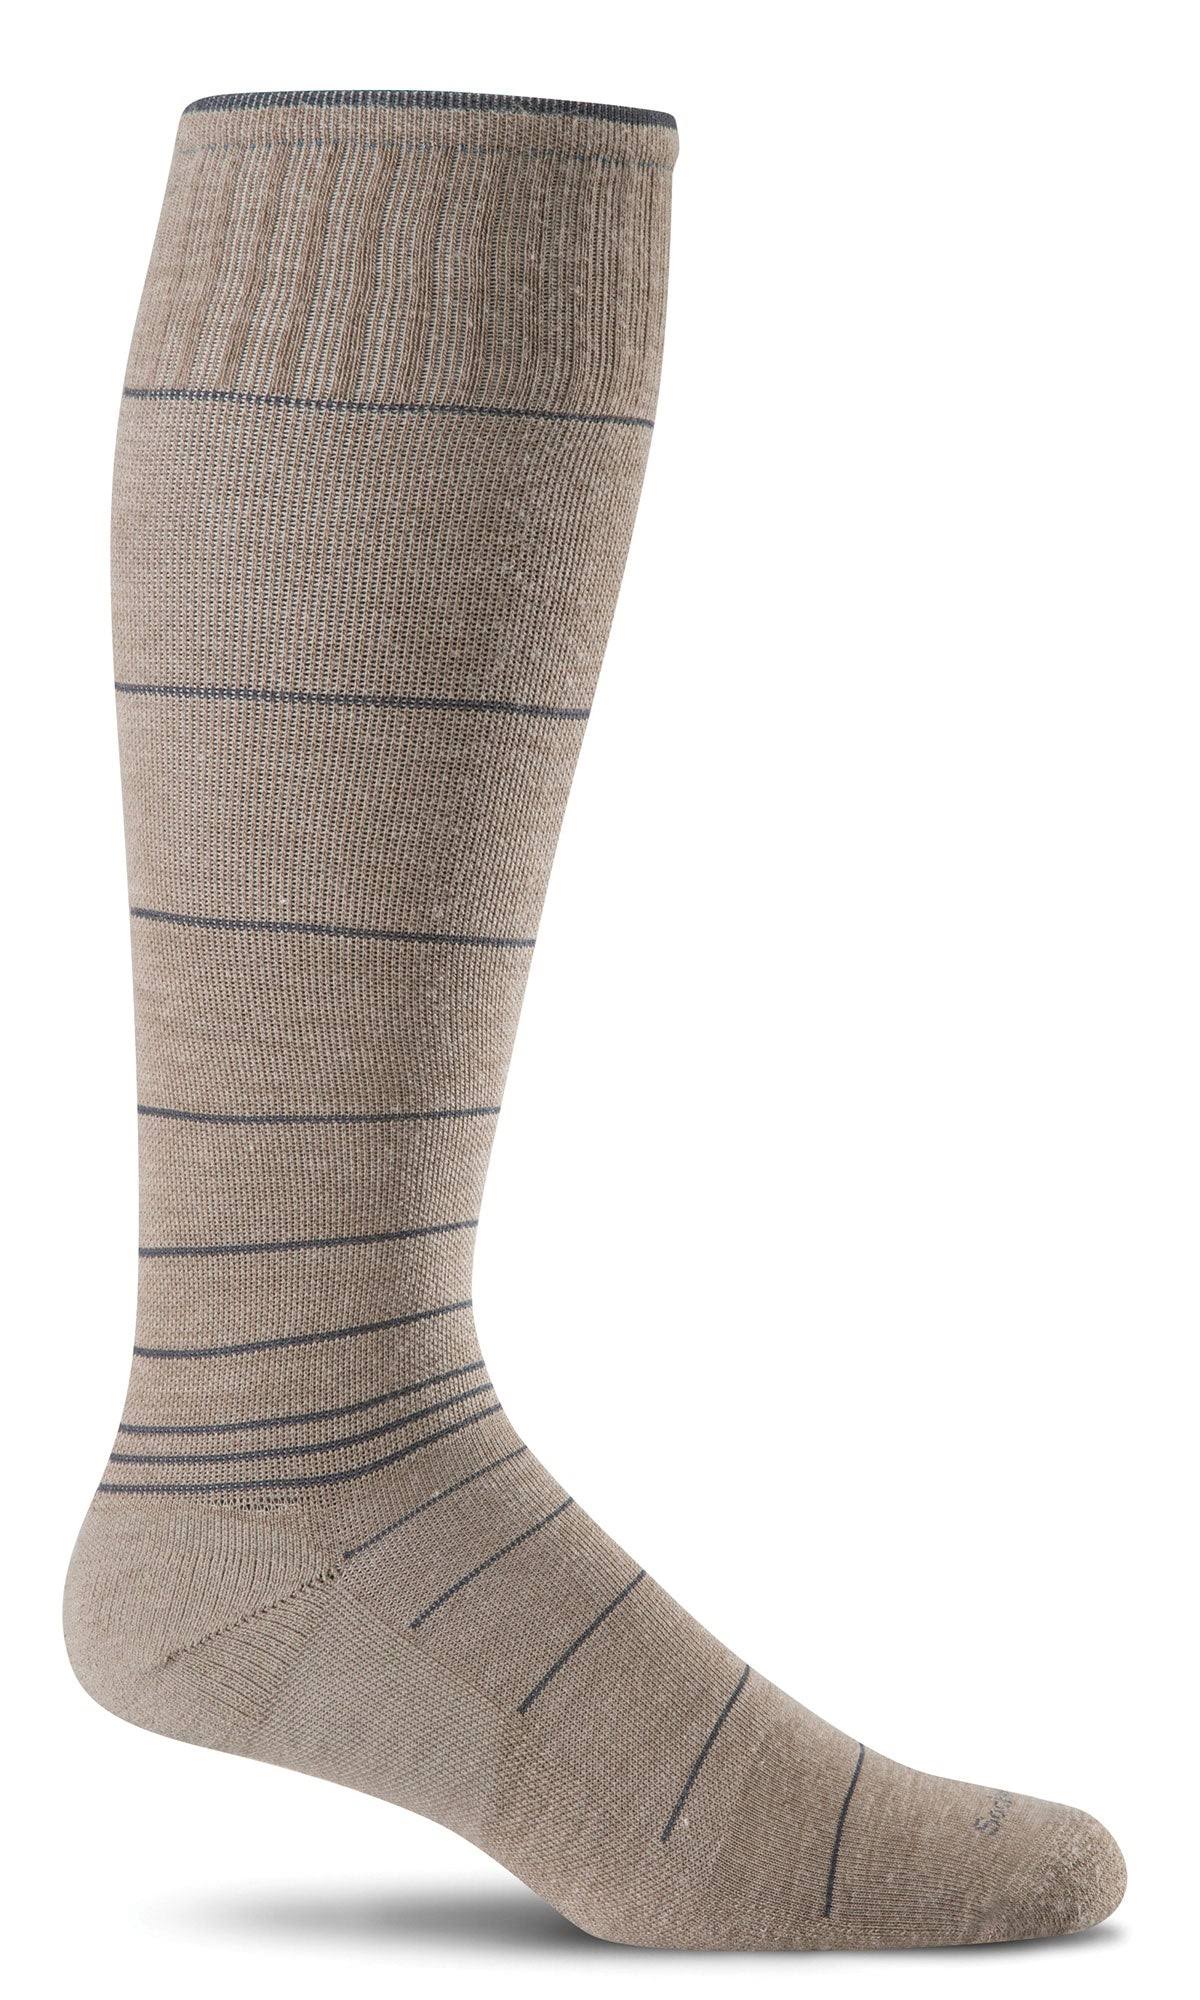 Sockwell Men's Circulator Compression Socks - Khaki, Medium/Large